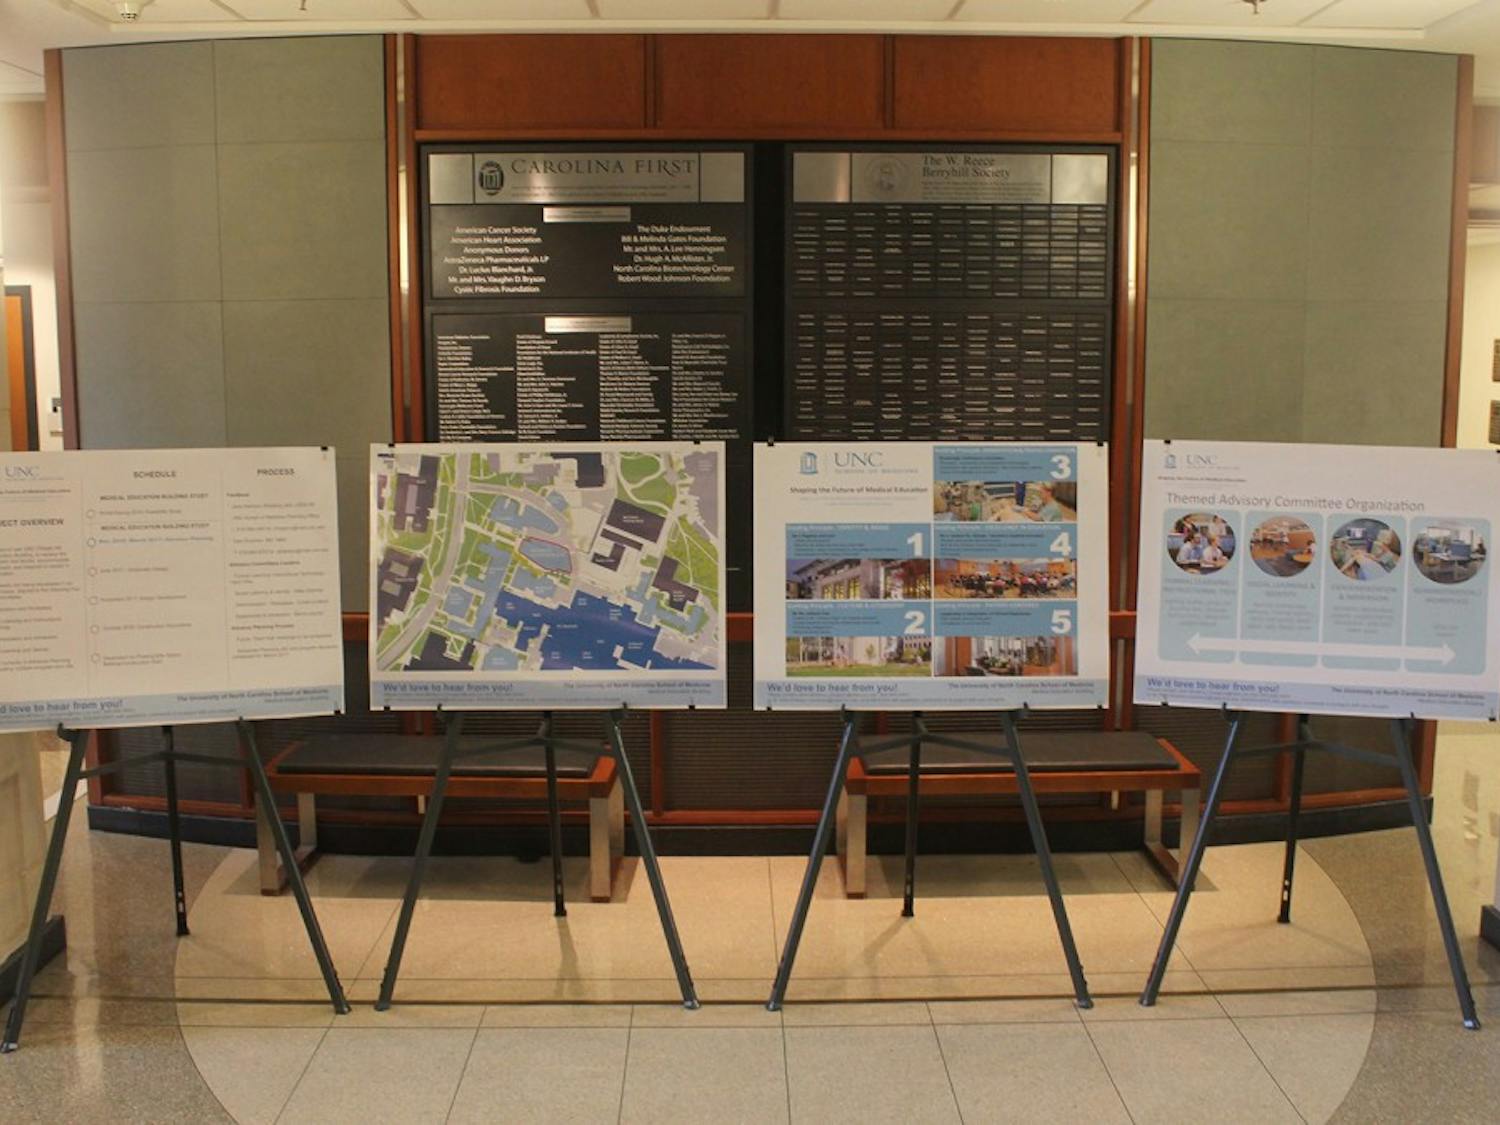 Posters explaining the Beryhill Hall renovation plans